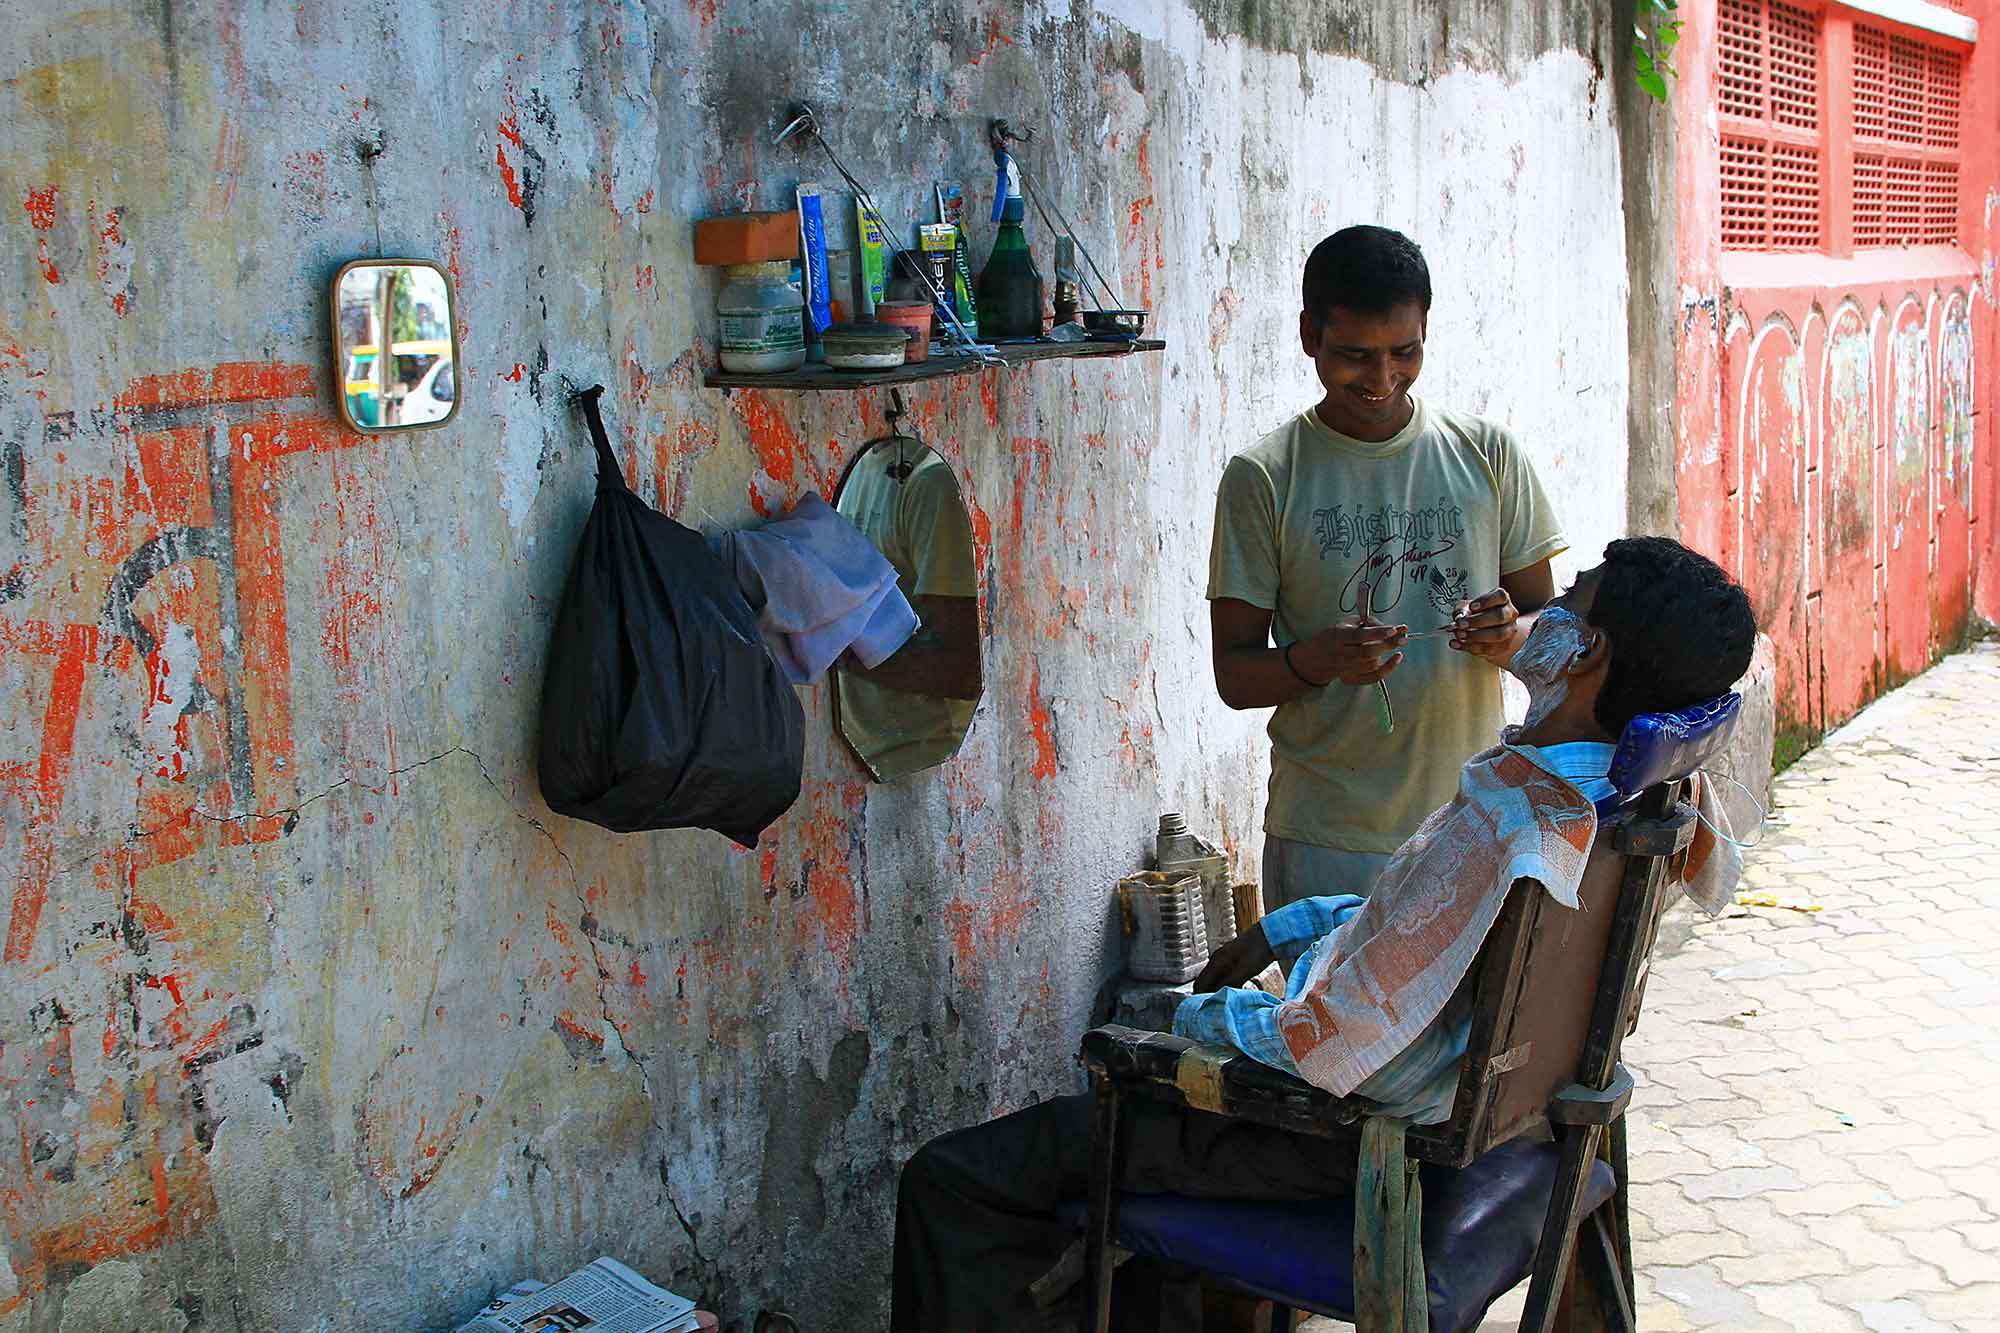 barber-shop-side-street-varanasi-india